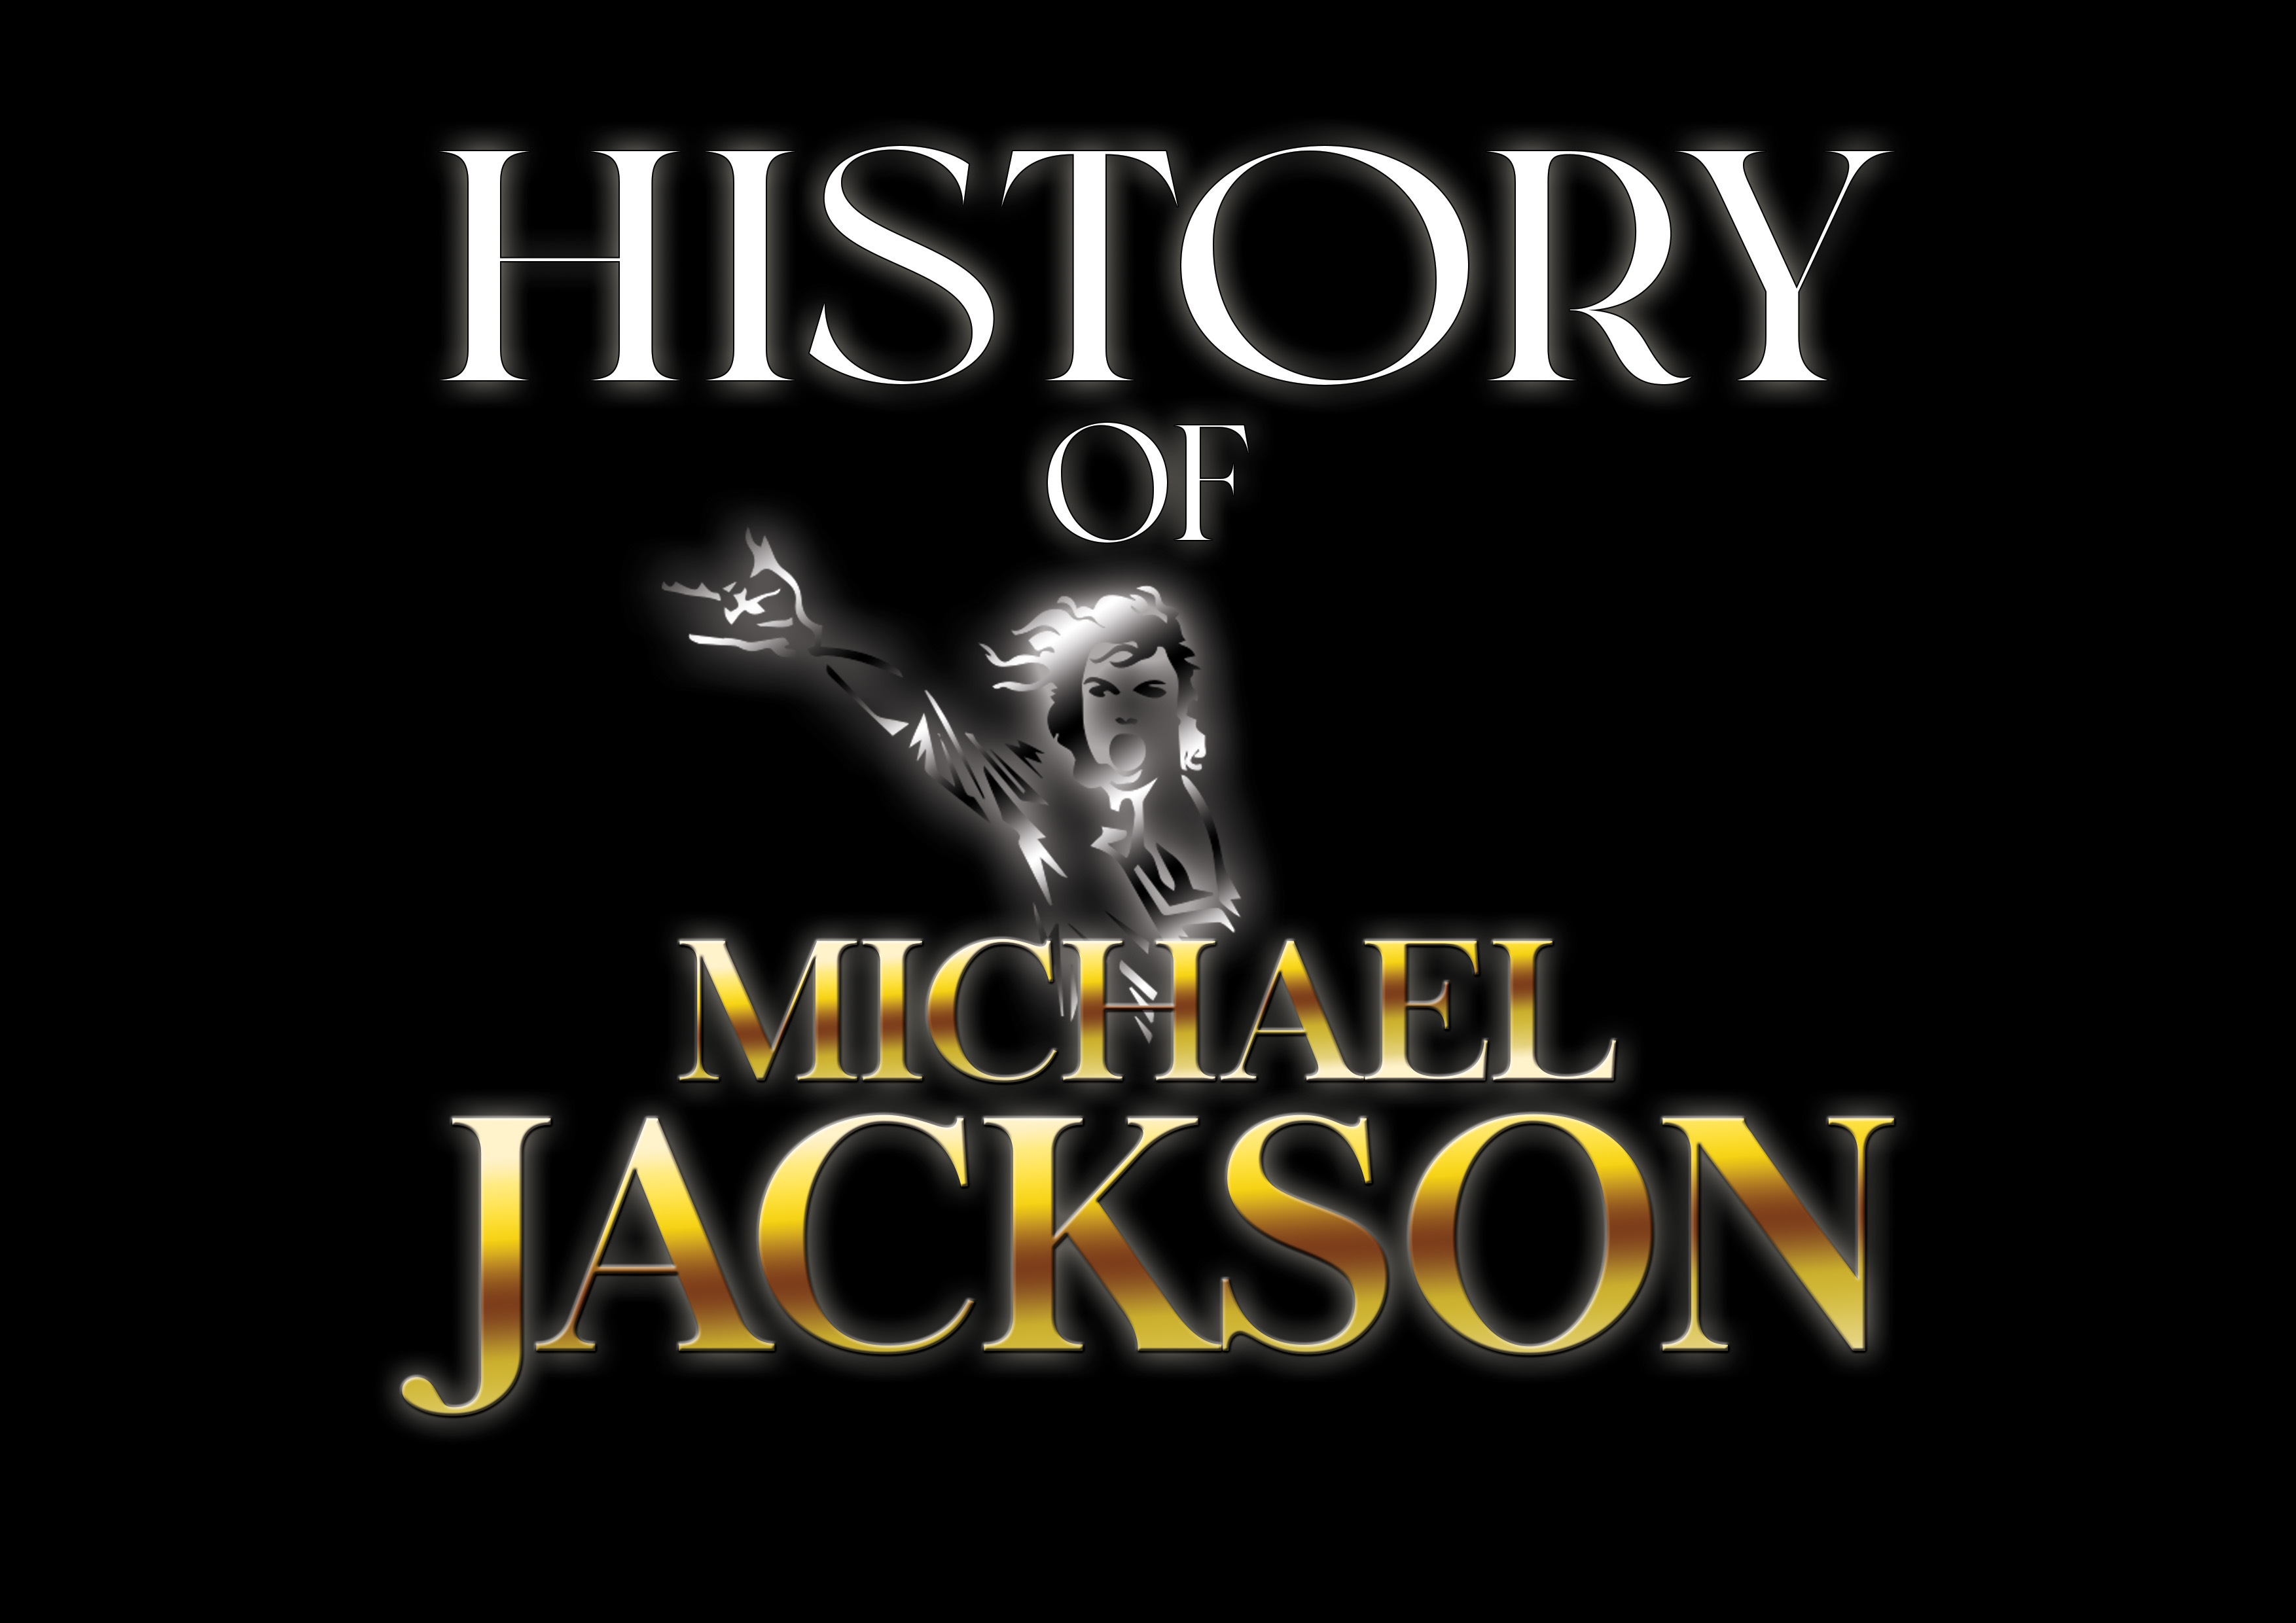 History of Michael Jackson